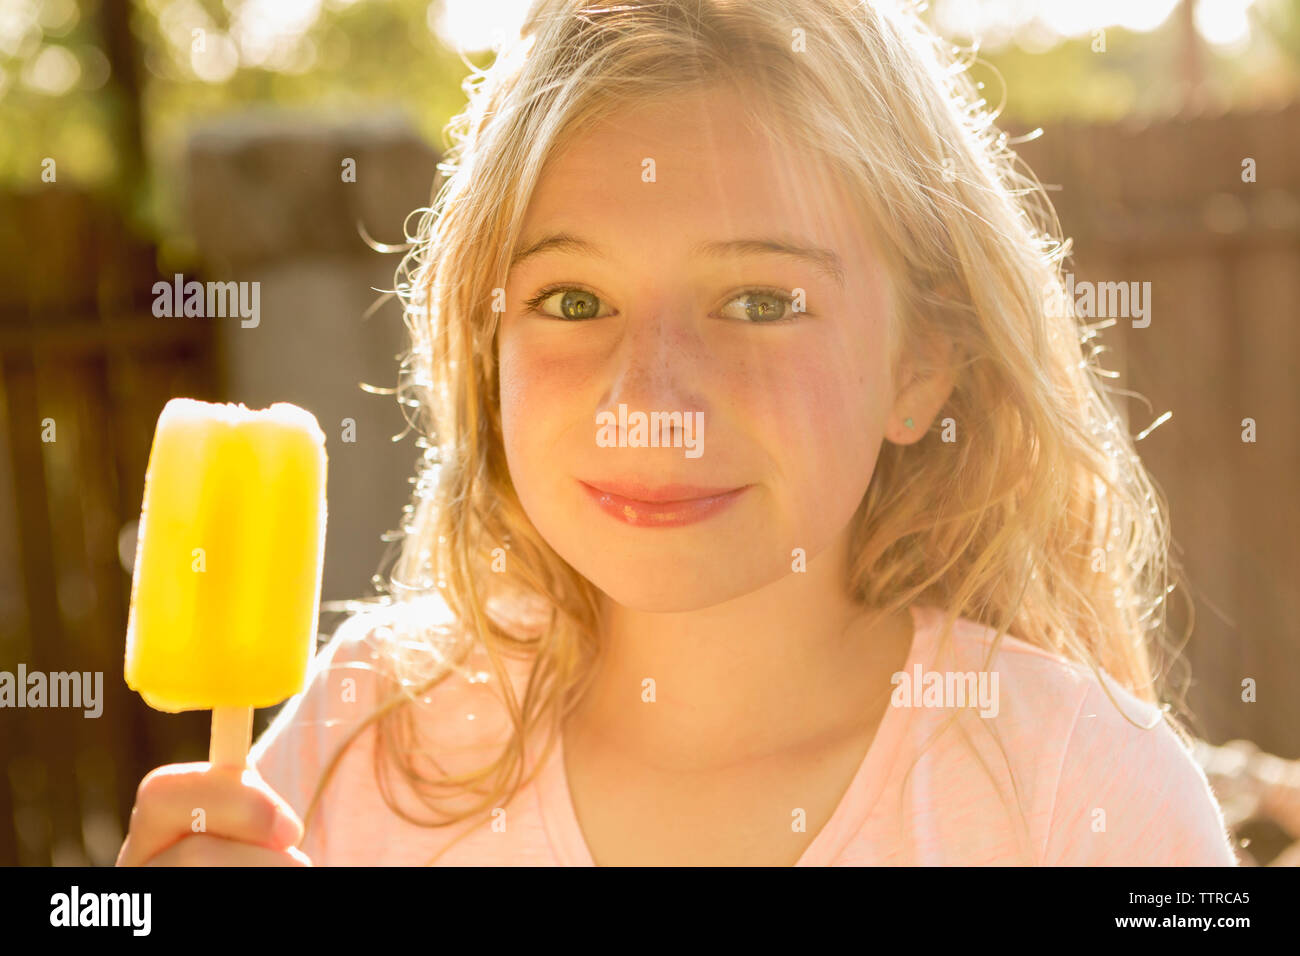 Portrait of girl holding popsicle at backyard Stock Photo